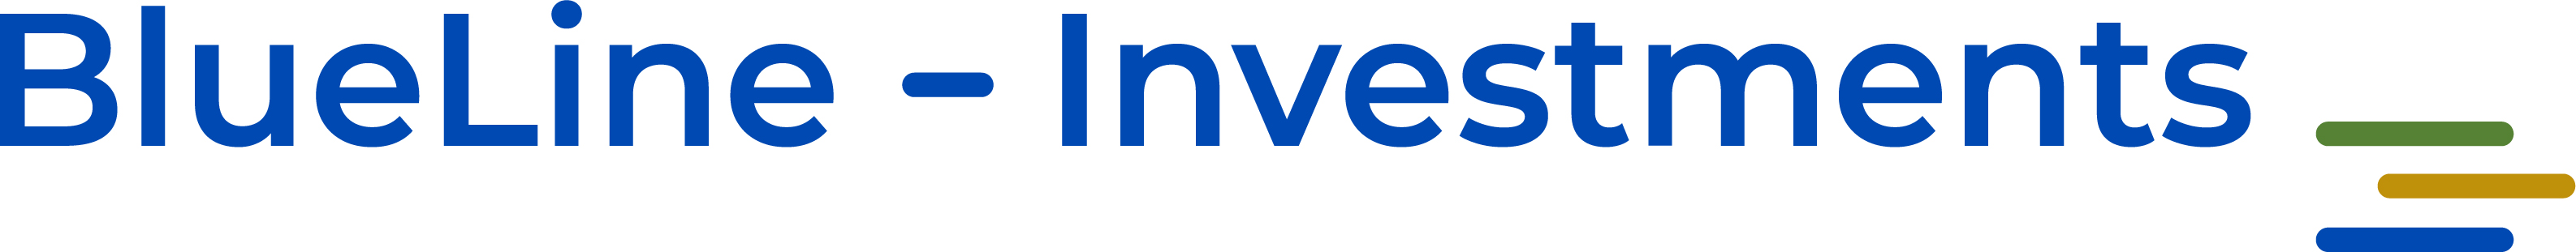 blue-line-investments-logo